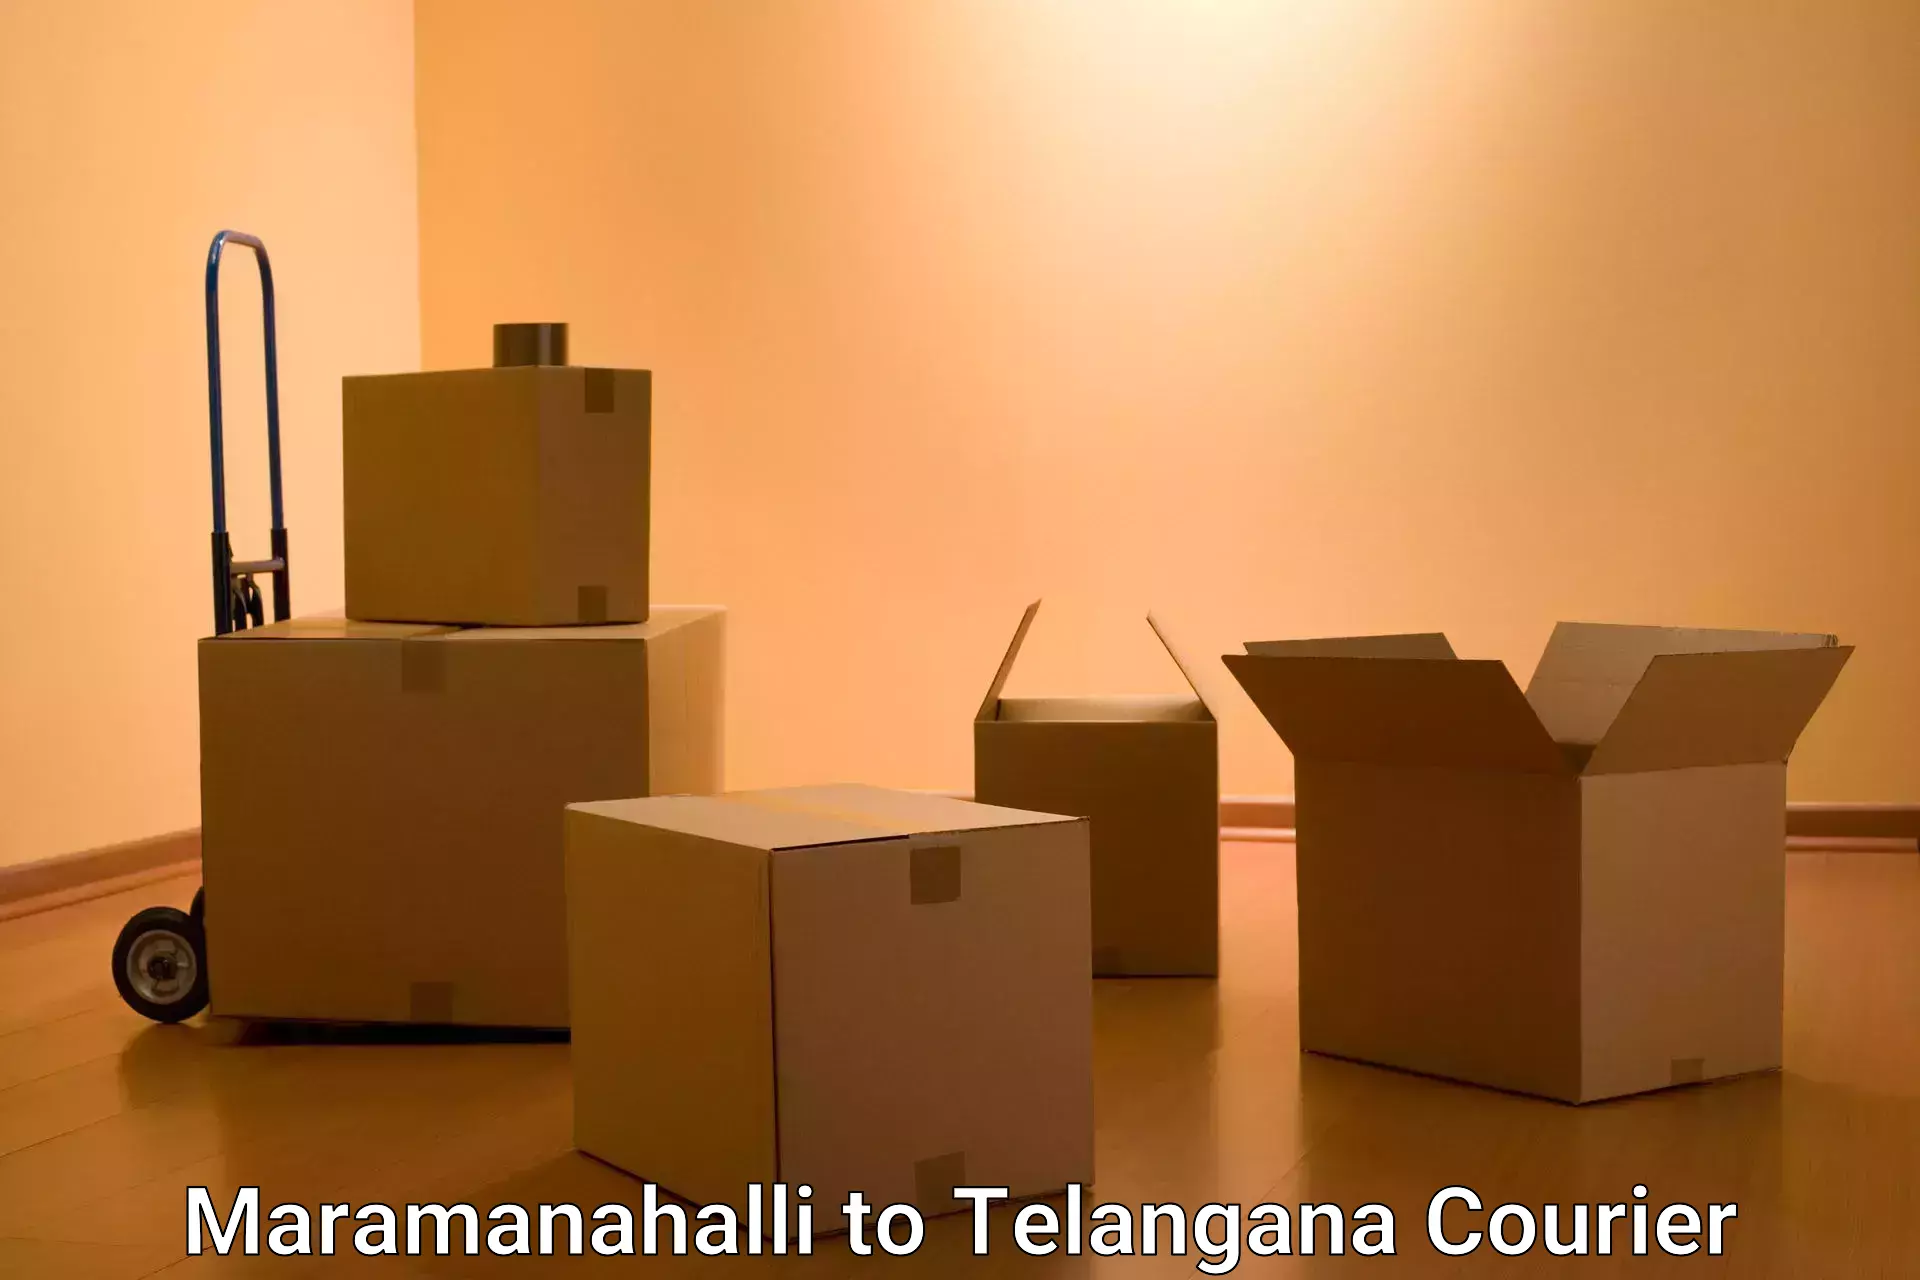 International courier networks Maramanahalli to Telangana